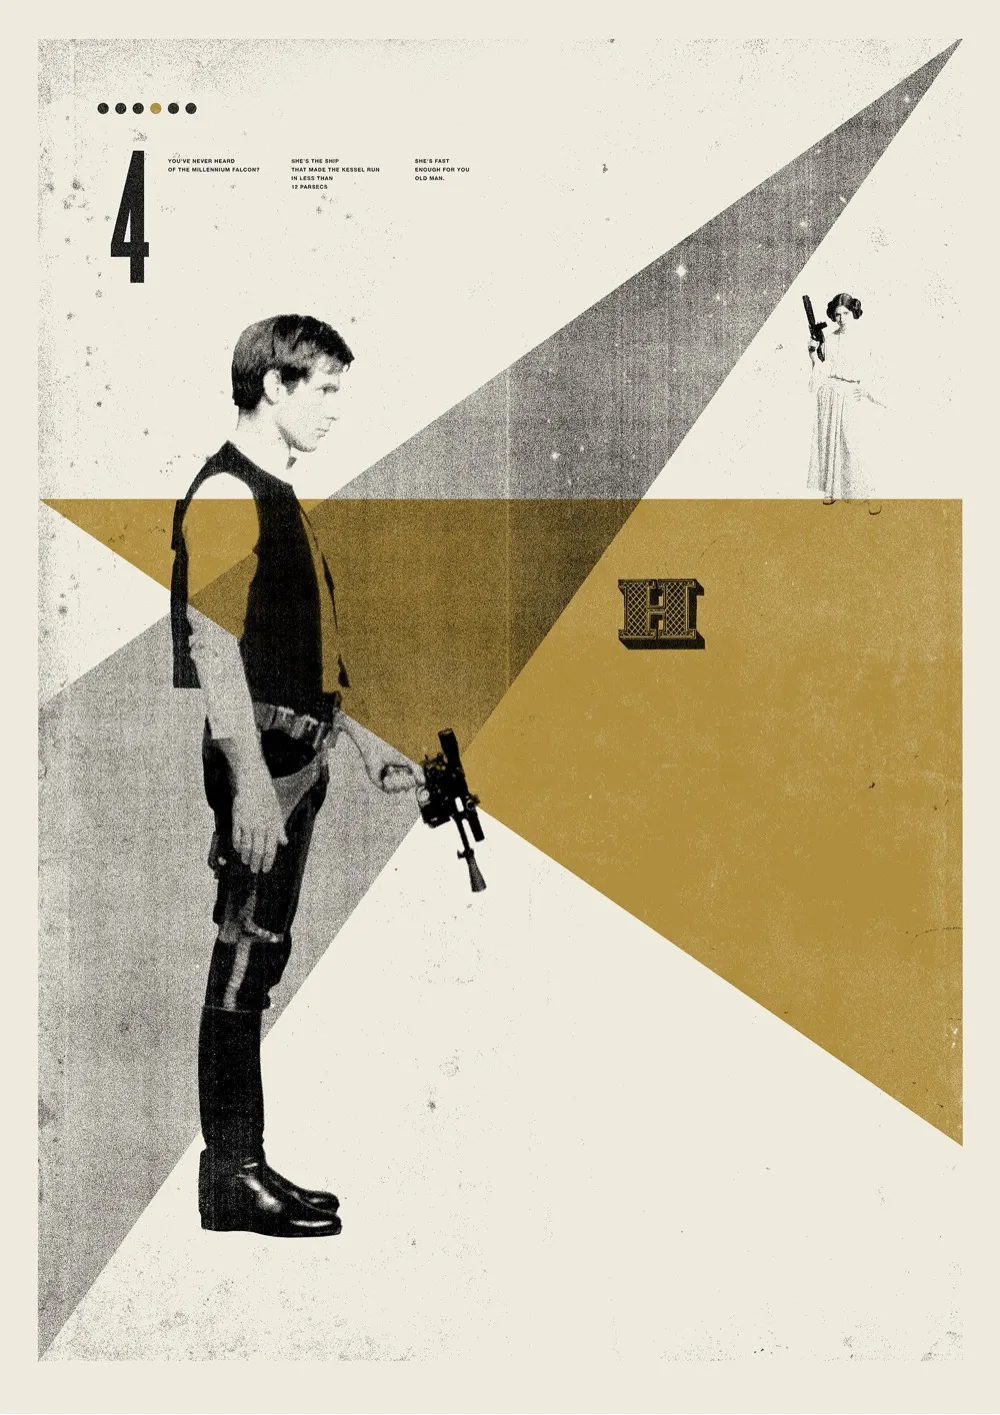 Starwars Retro Modern Movie Poster designed by Patrick Concepcion